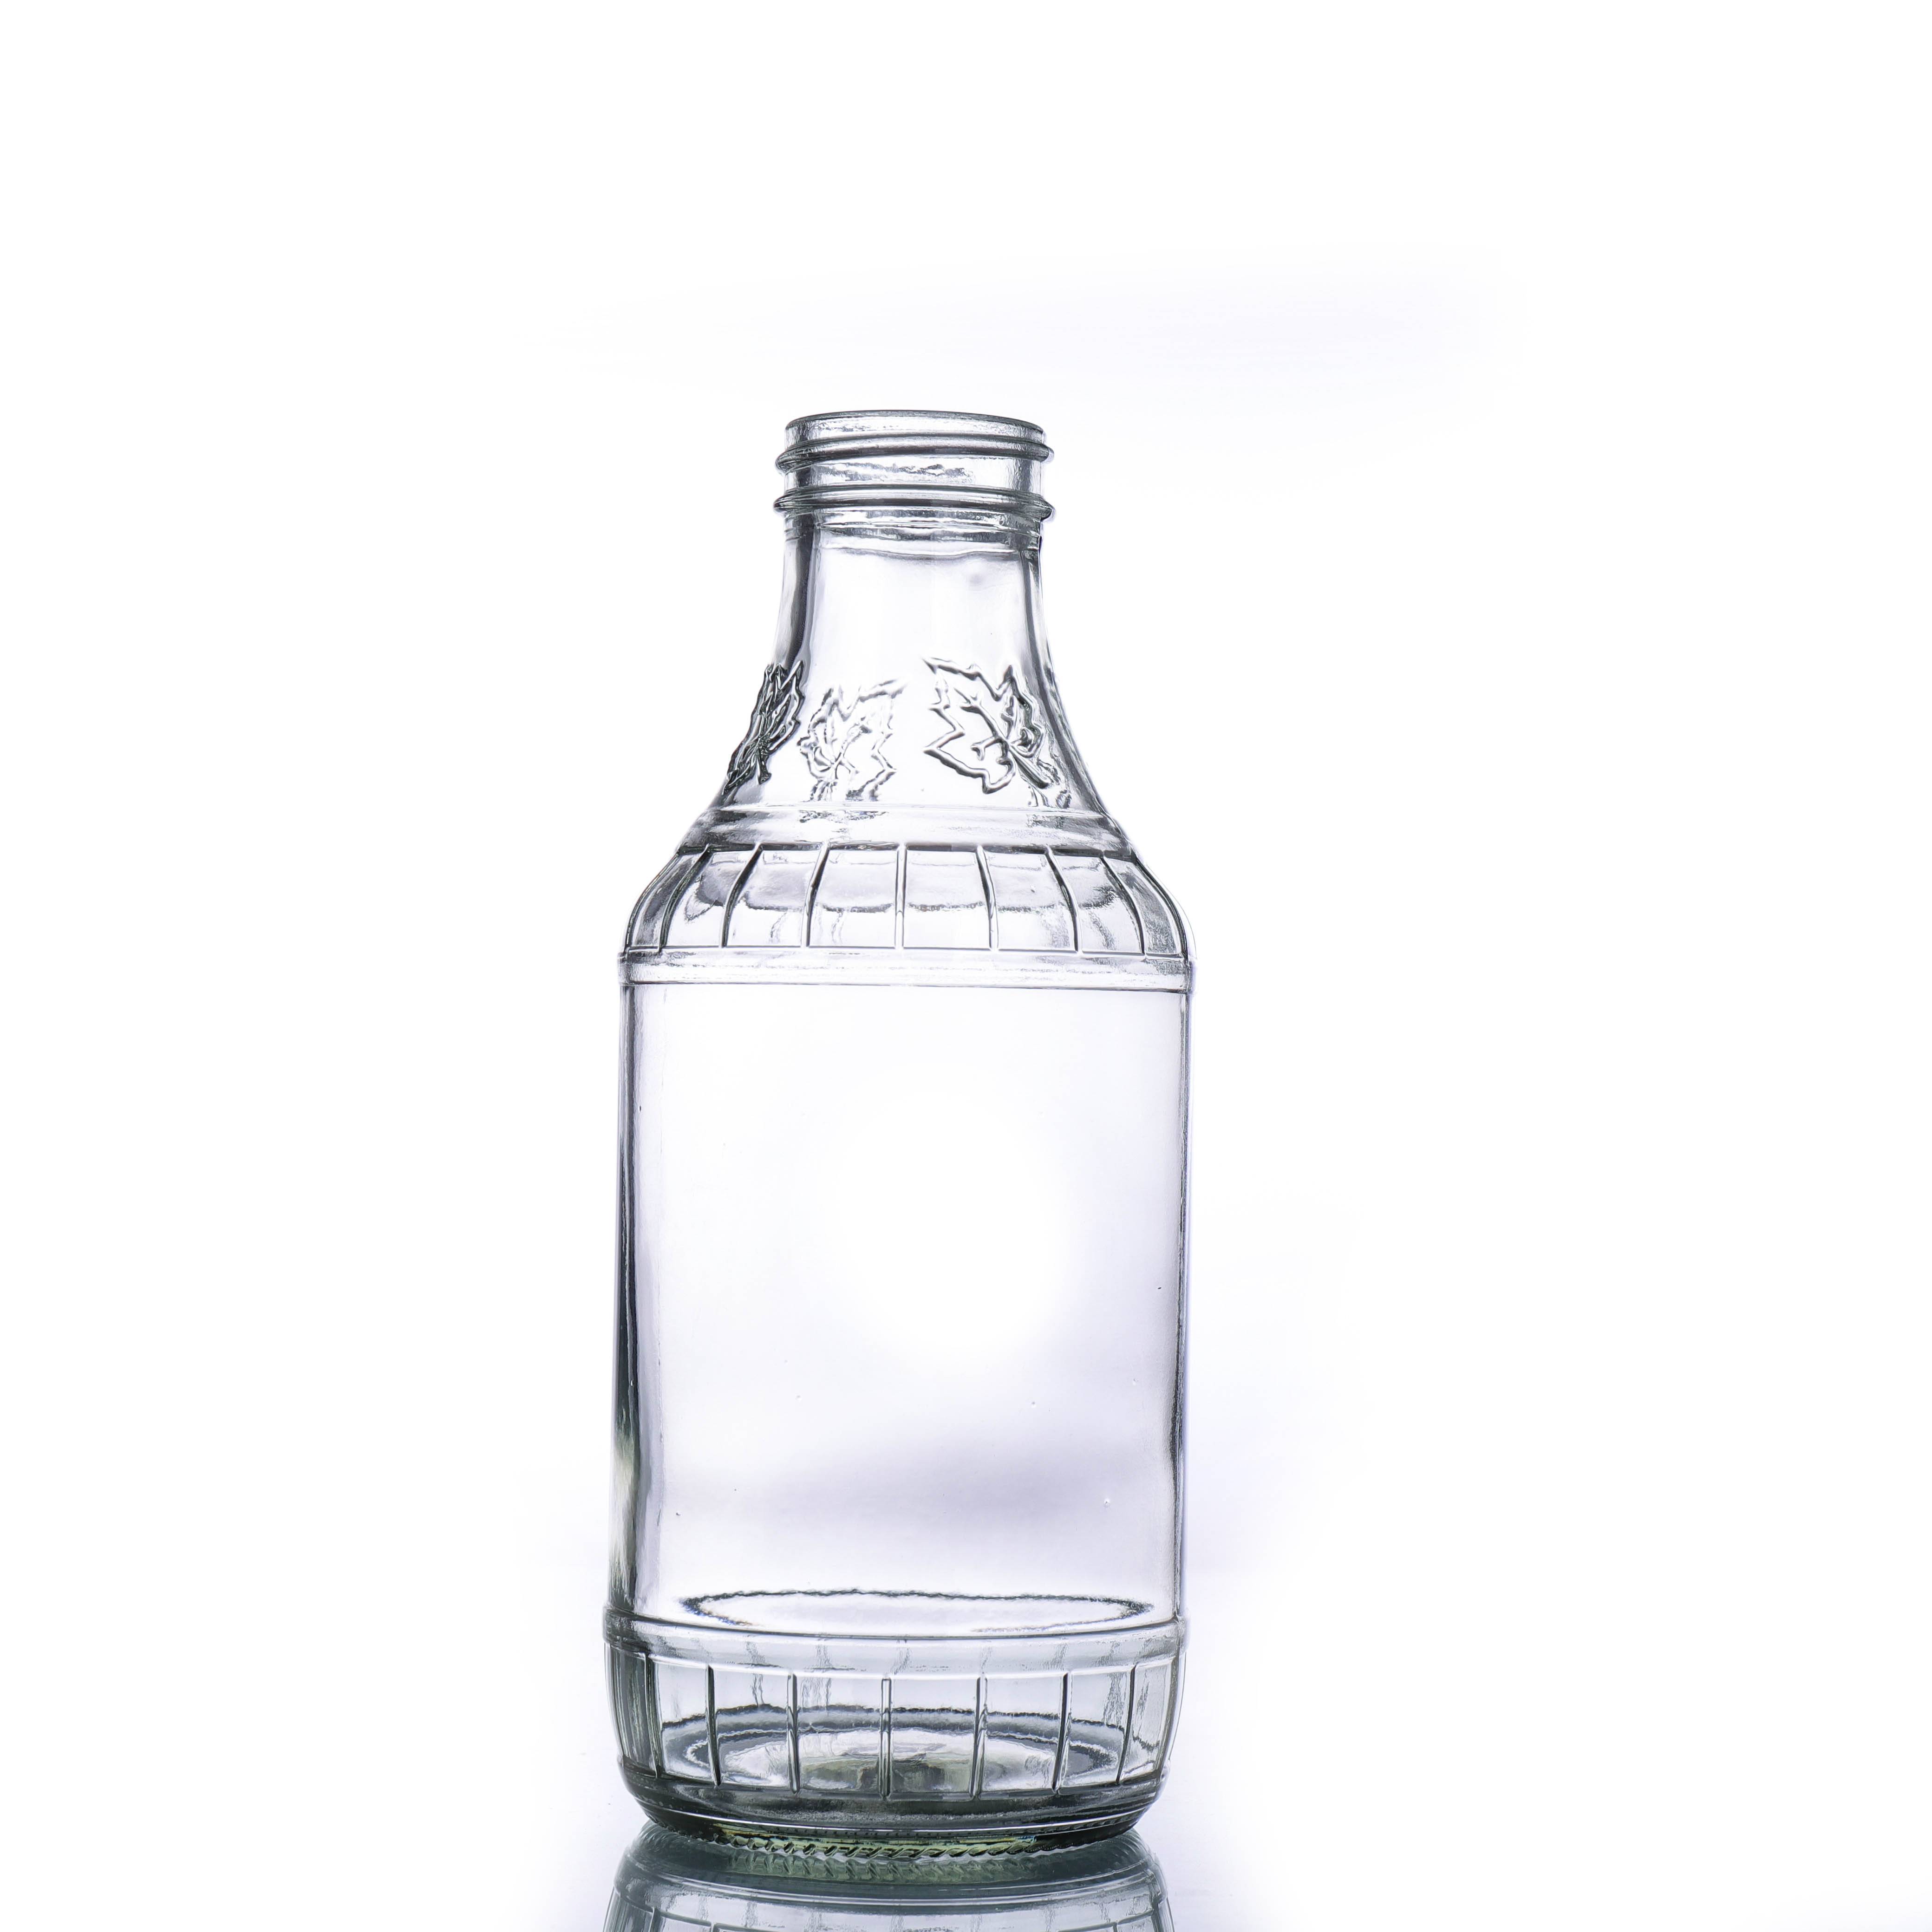 Pabrika Barato nga Hot Bottle Glass Glass Bottle Small - 16oz Clear Glass Decanter Bottle nga adunay 38mm lug finish - Ant Glass